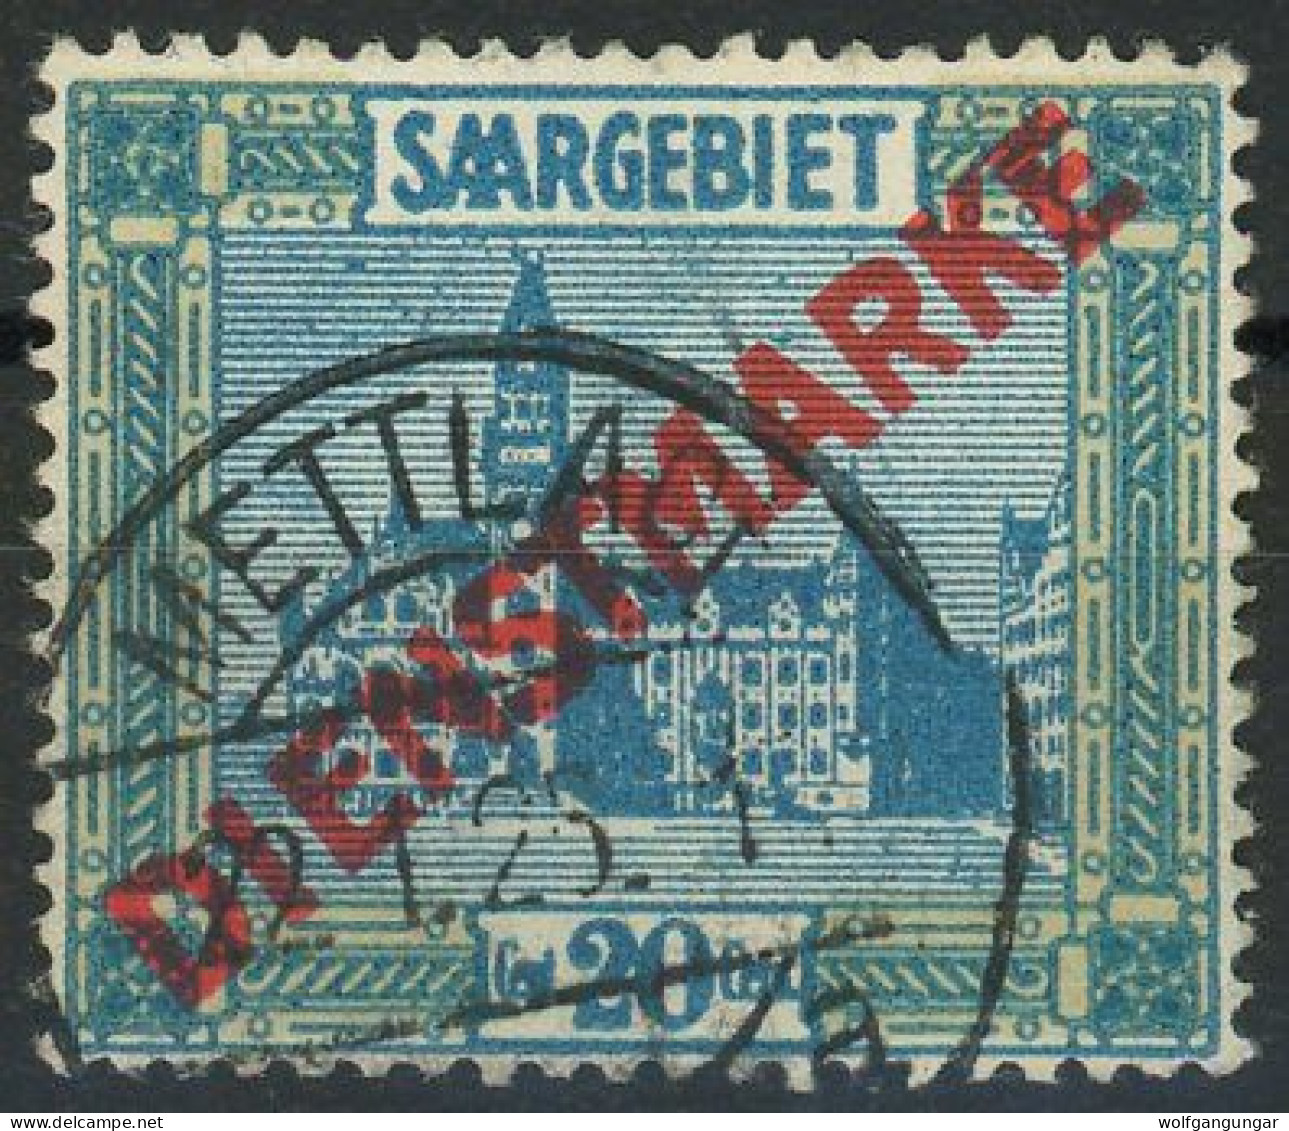 SAAR DIENSTMARKEN 1923 Michel Nummer 13I Gestempelt - Dienstzegels